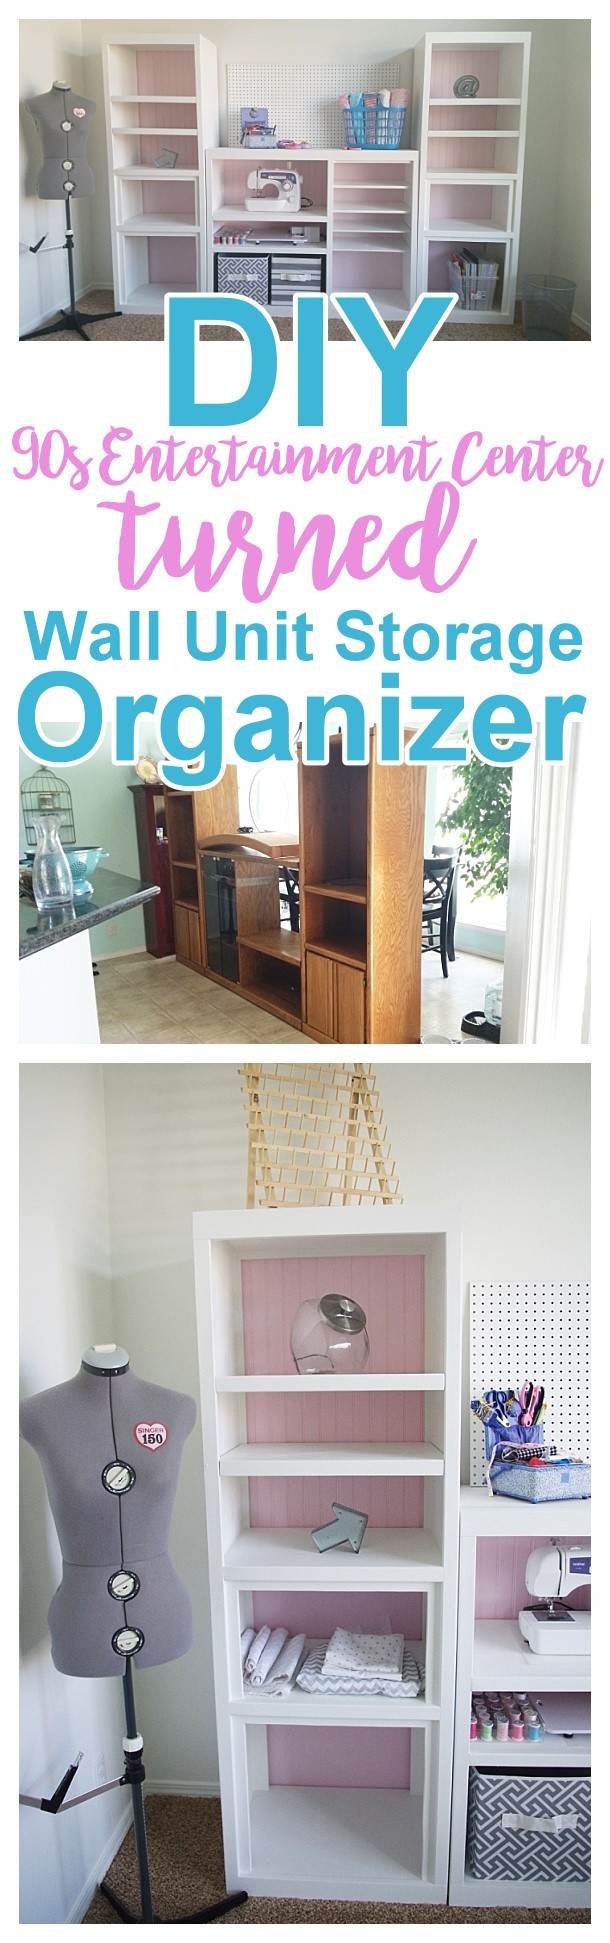 Best ideas about DIY Craft Organizer
. Save or Pin DIY Craft Room Wall Storage Organizer Unit Furniture Now.